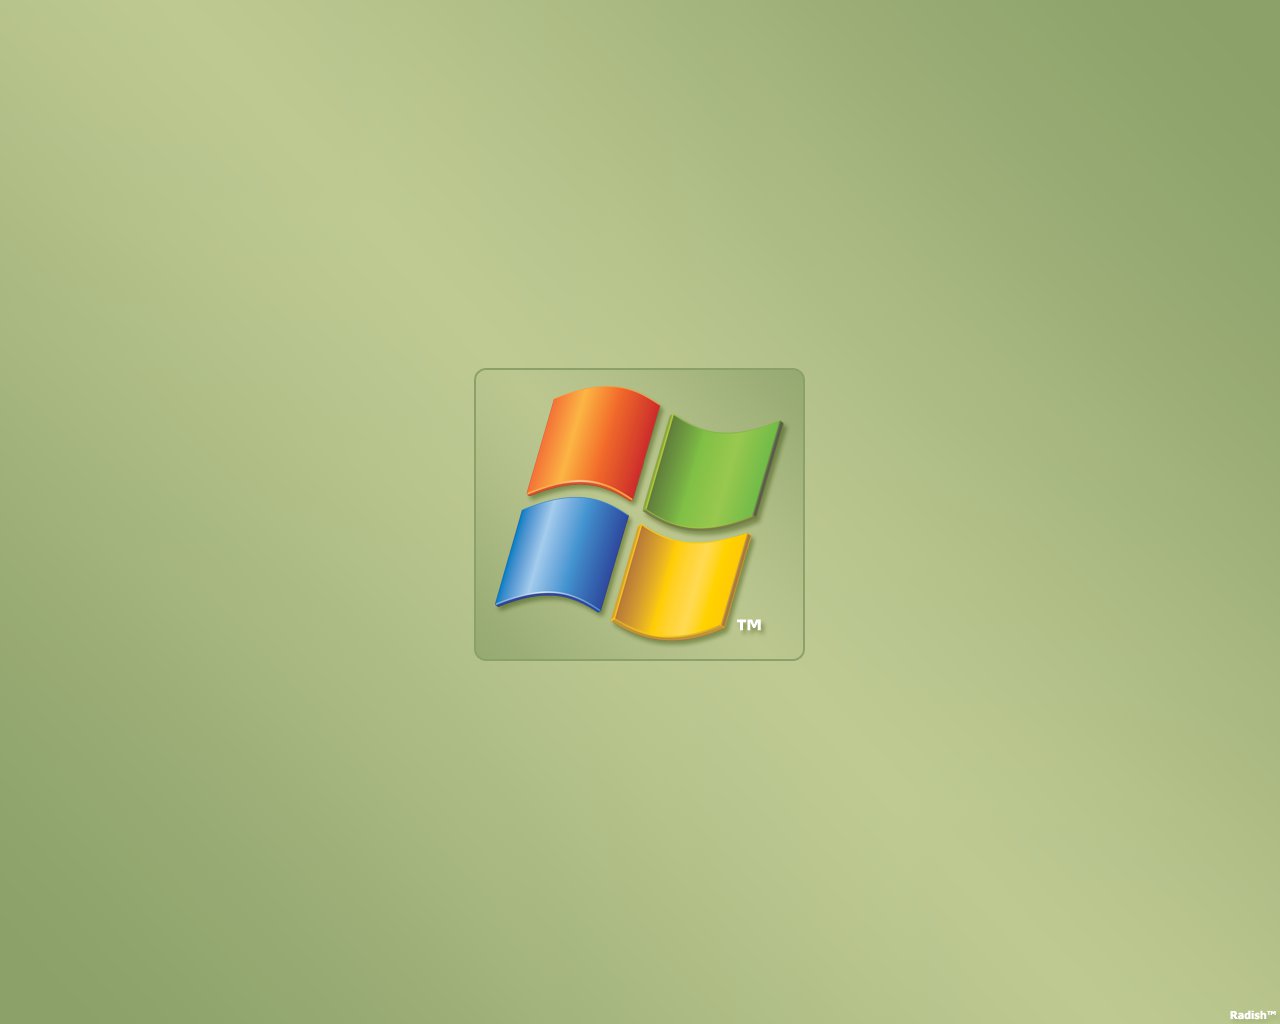 Ms Windows Xp Olive Green Flag By Radishtm